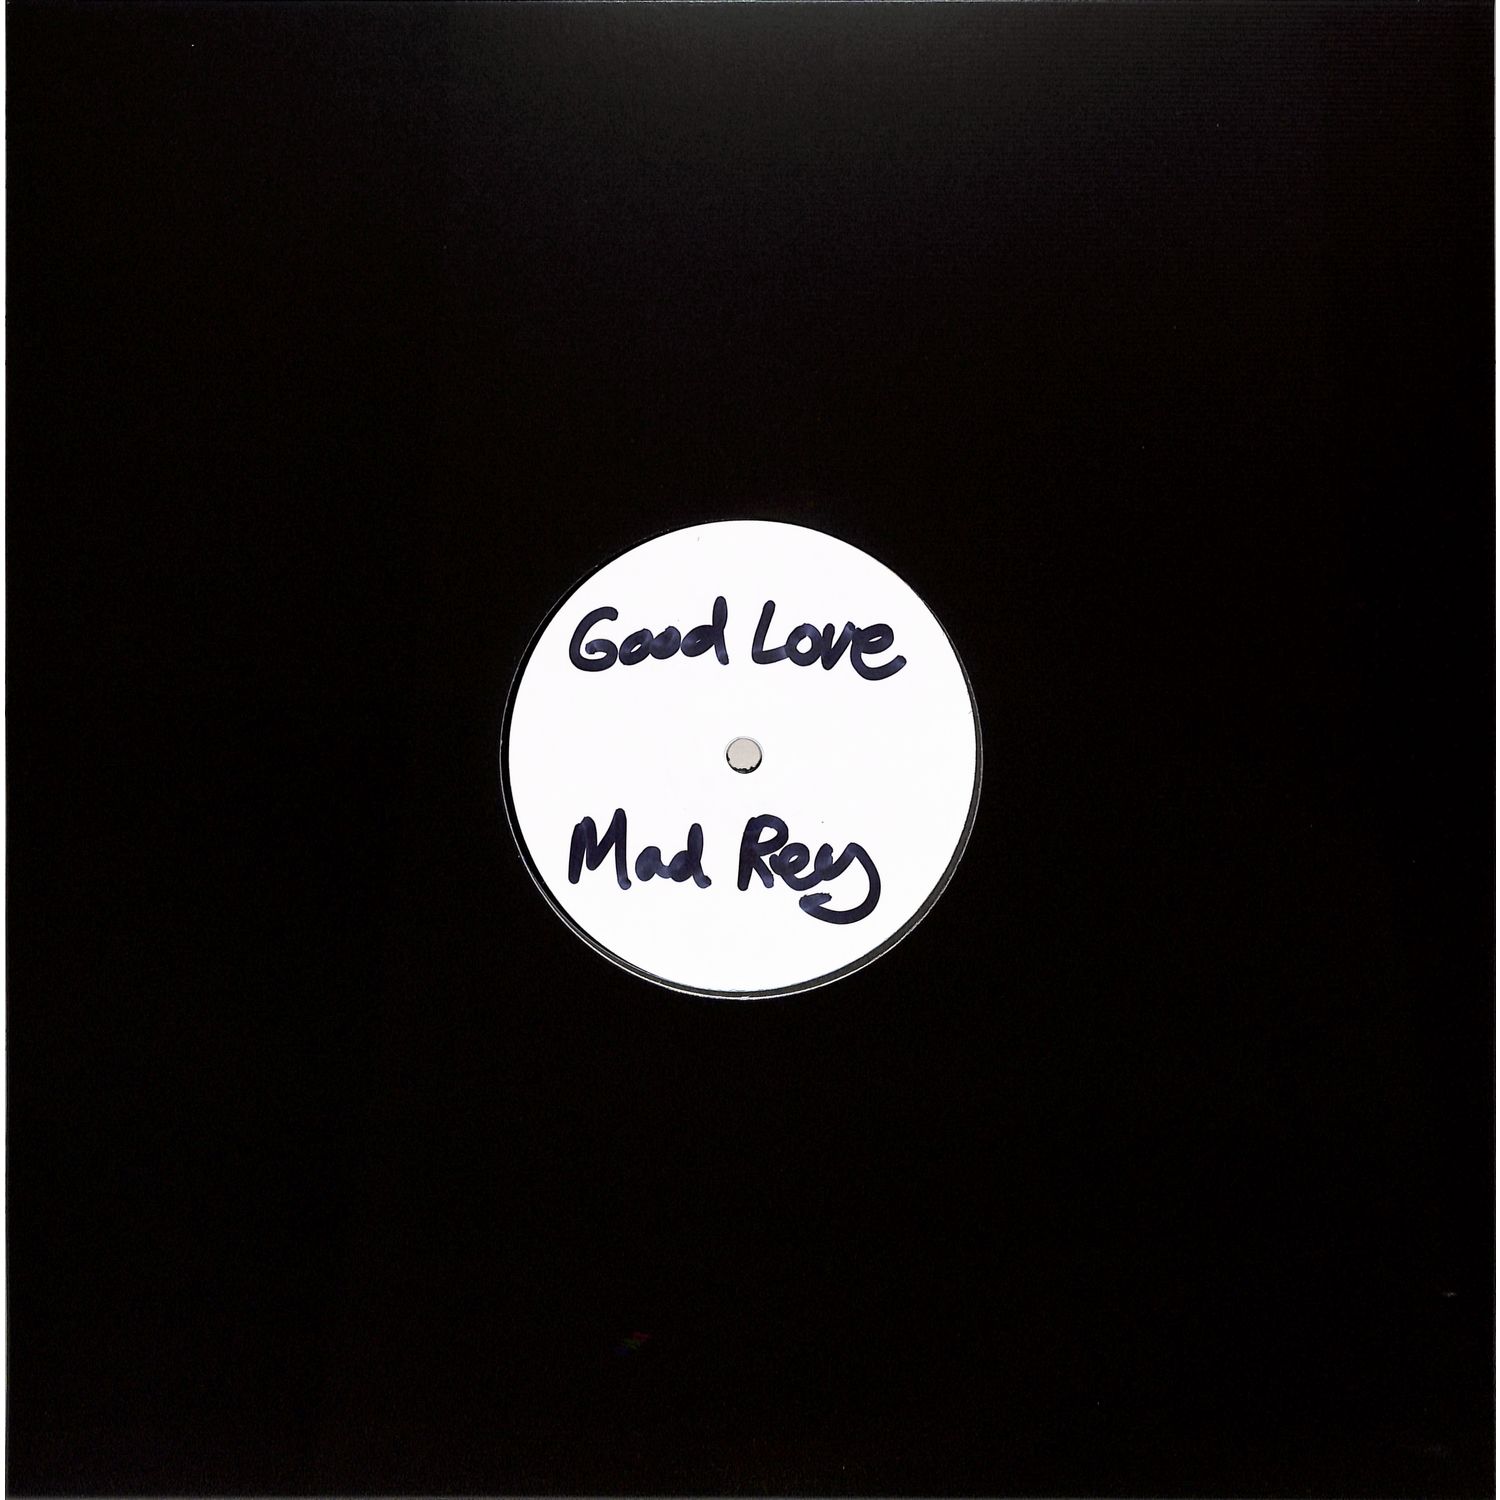 Mad Rey - GOOD LOVE EP